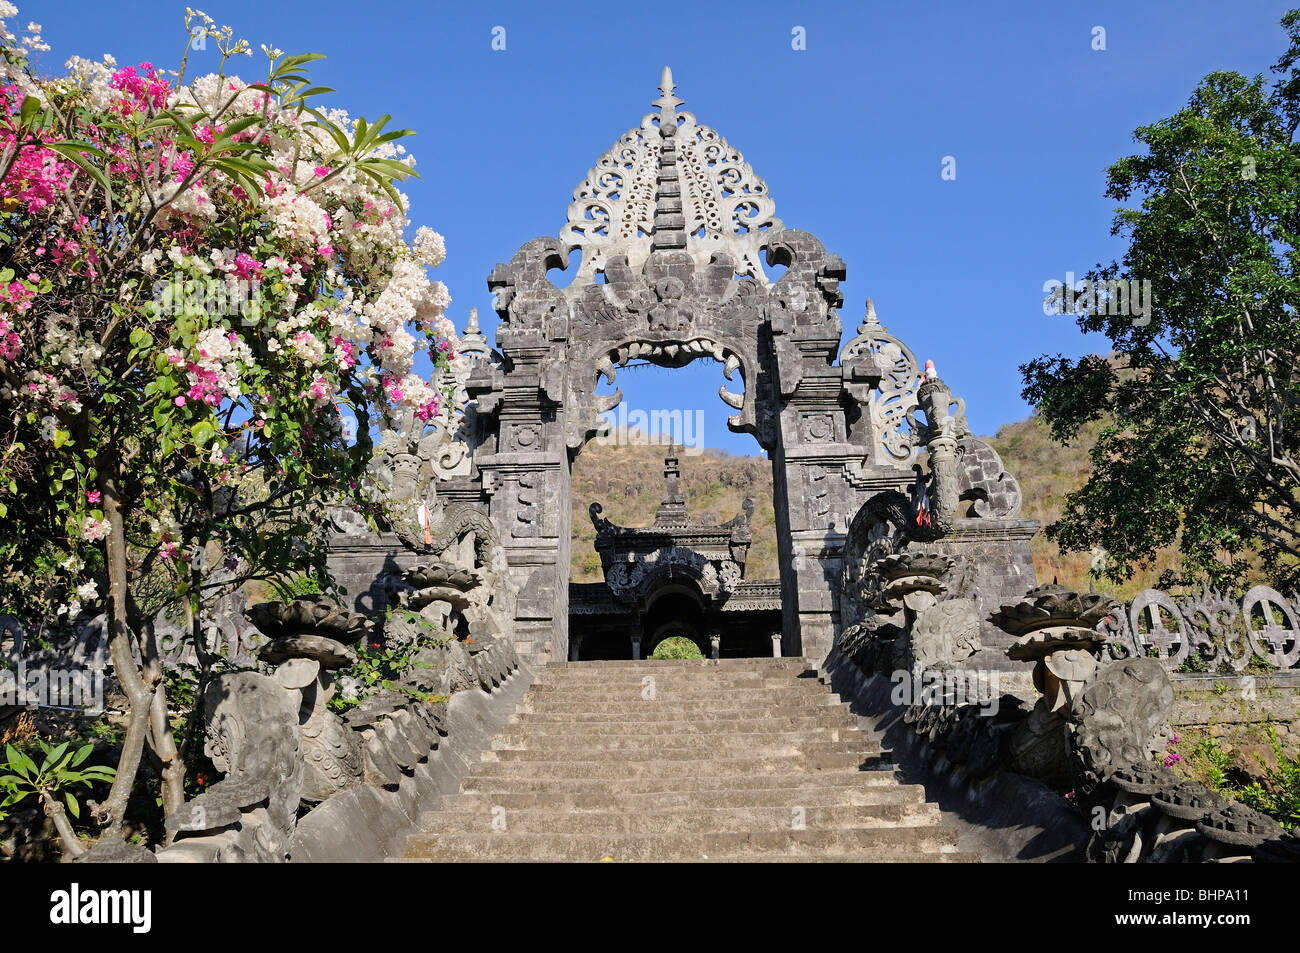 Balinese Hindu Temple, Melanting Temple, Pemuteran, Bali, Indonesia Stock Photo